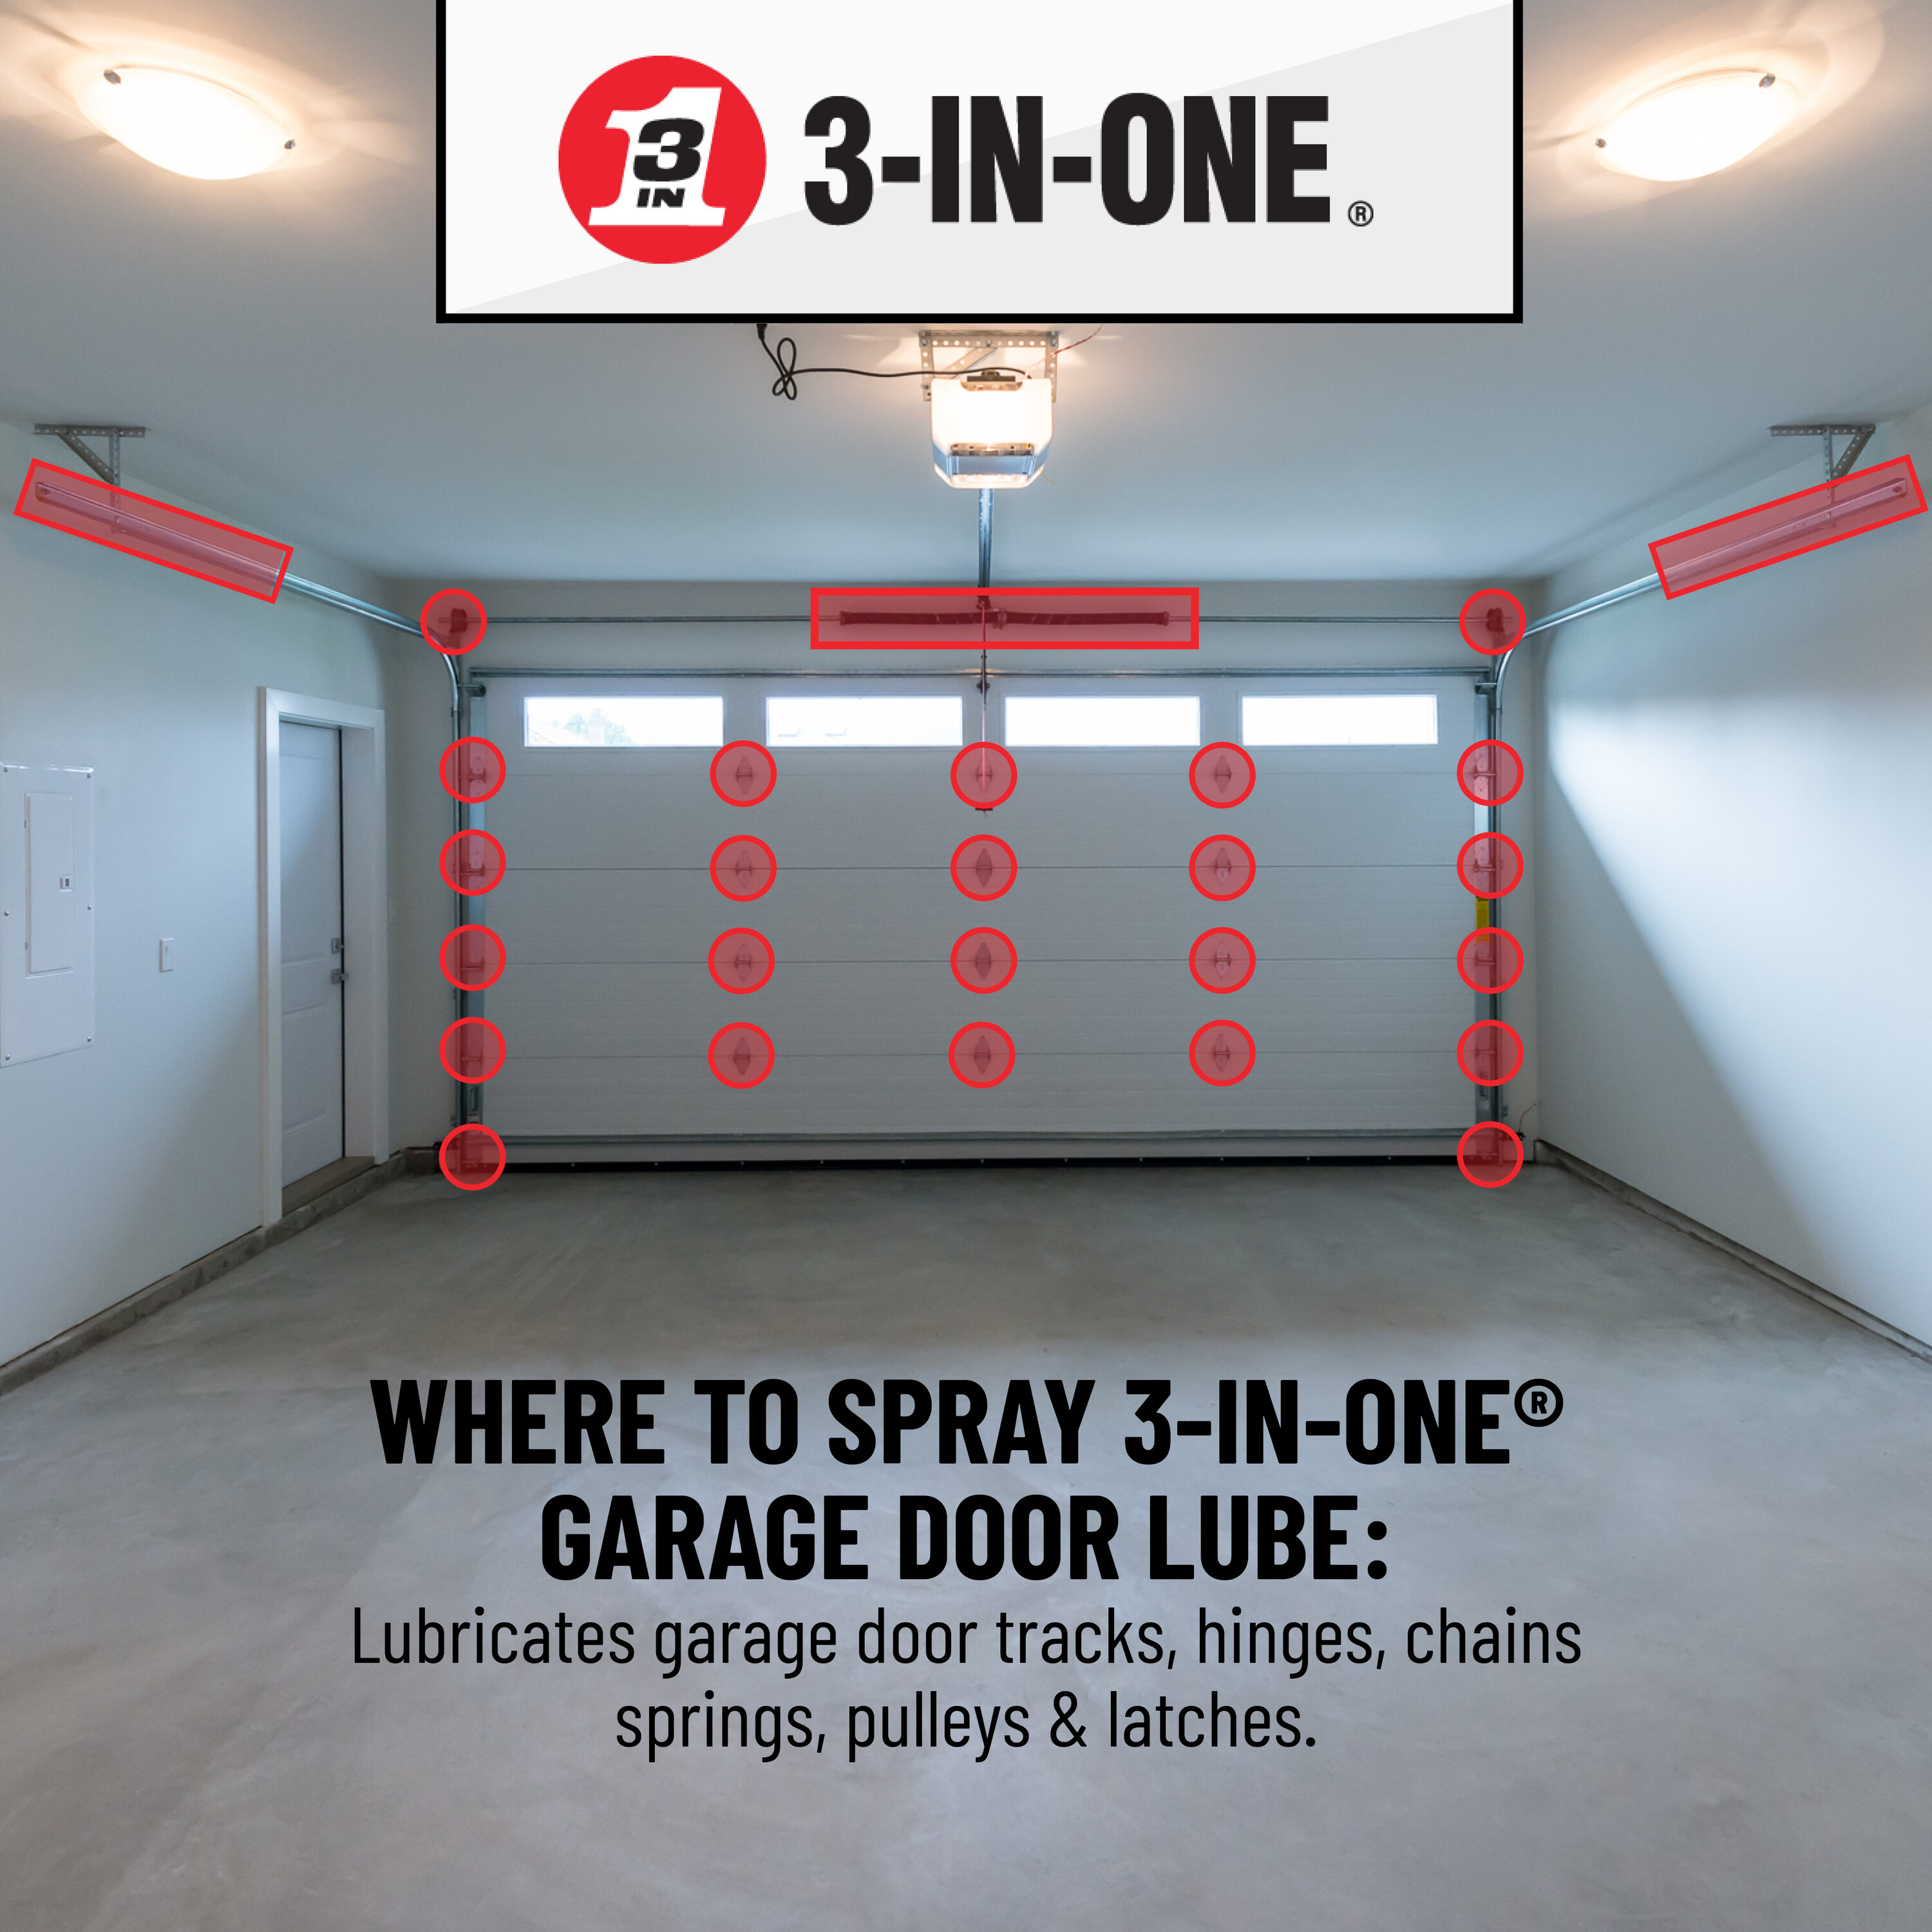 3-IN-ONE 100581 Professional Garage Door Lubricant Spray, 11 oz. (Pack of 4)